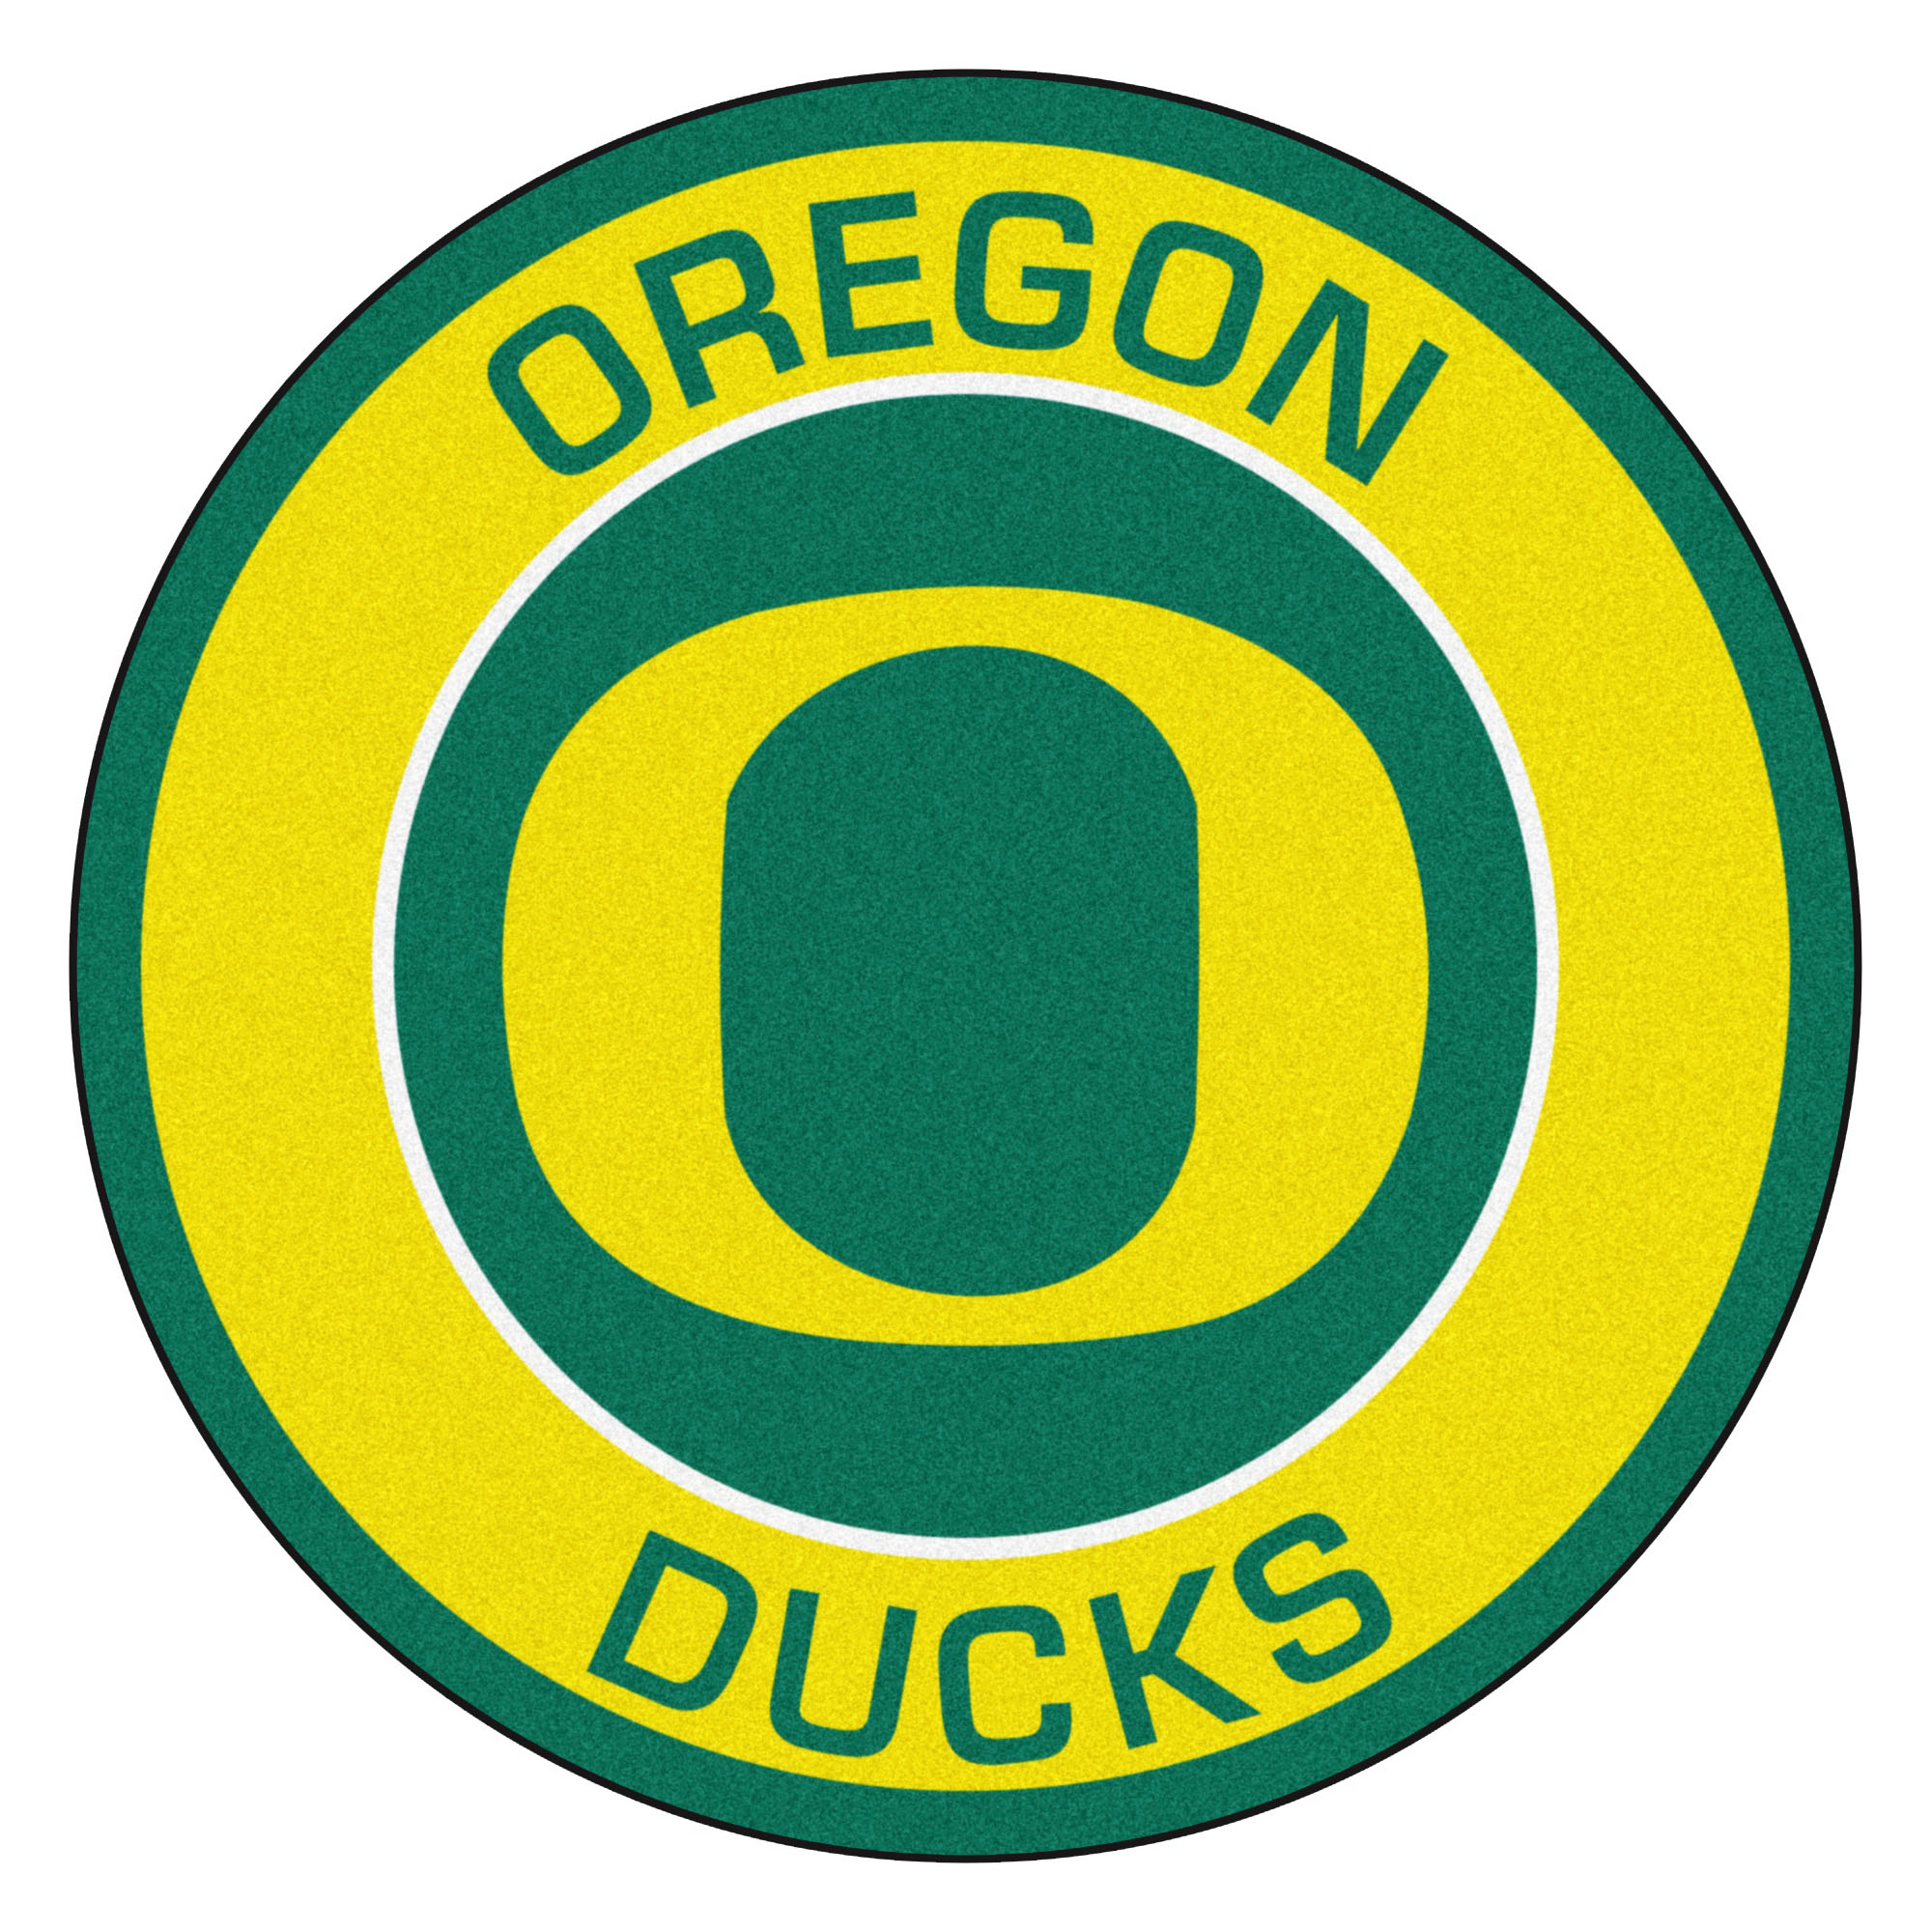 University of Oregon Ducks Logo Roundel Mat, 27. helpful non helpful. every...